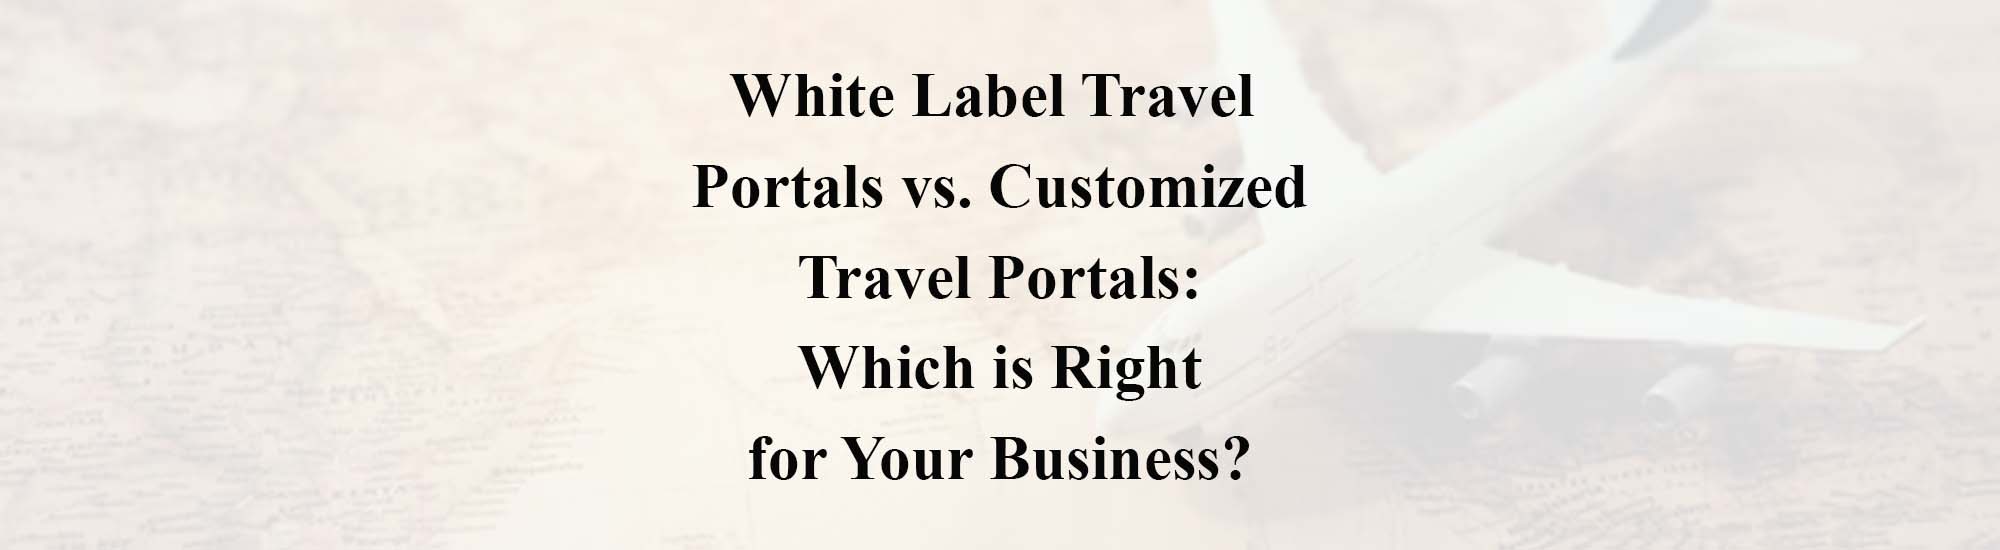 White-Label Travel Portals